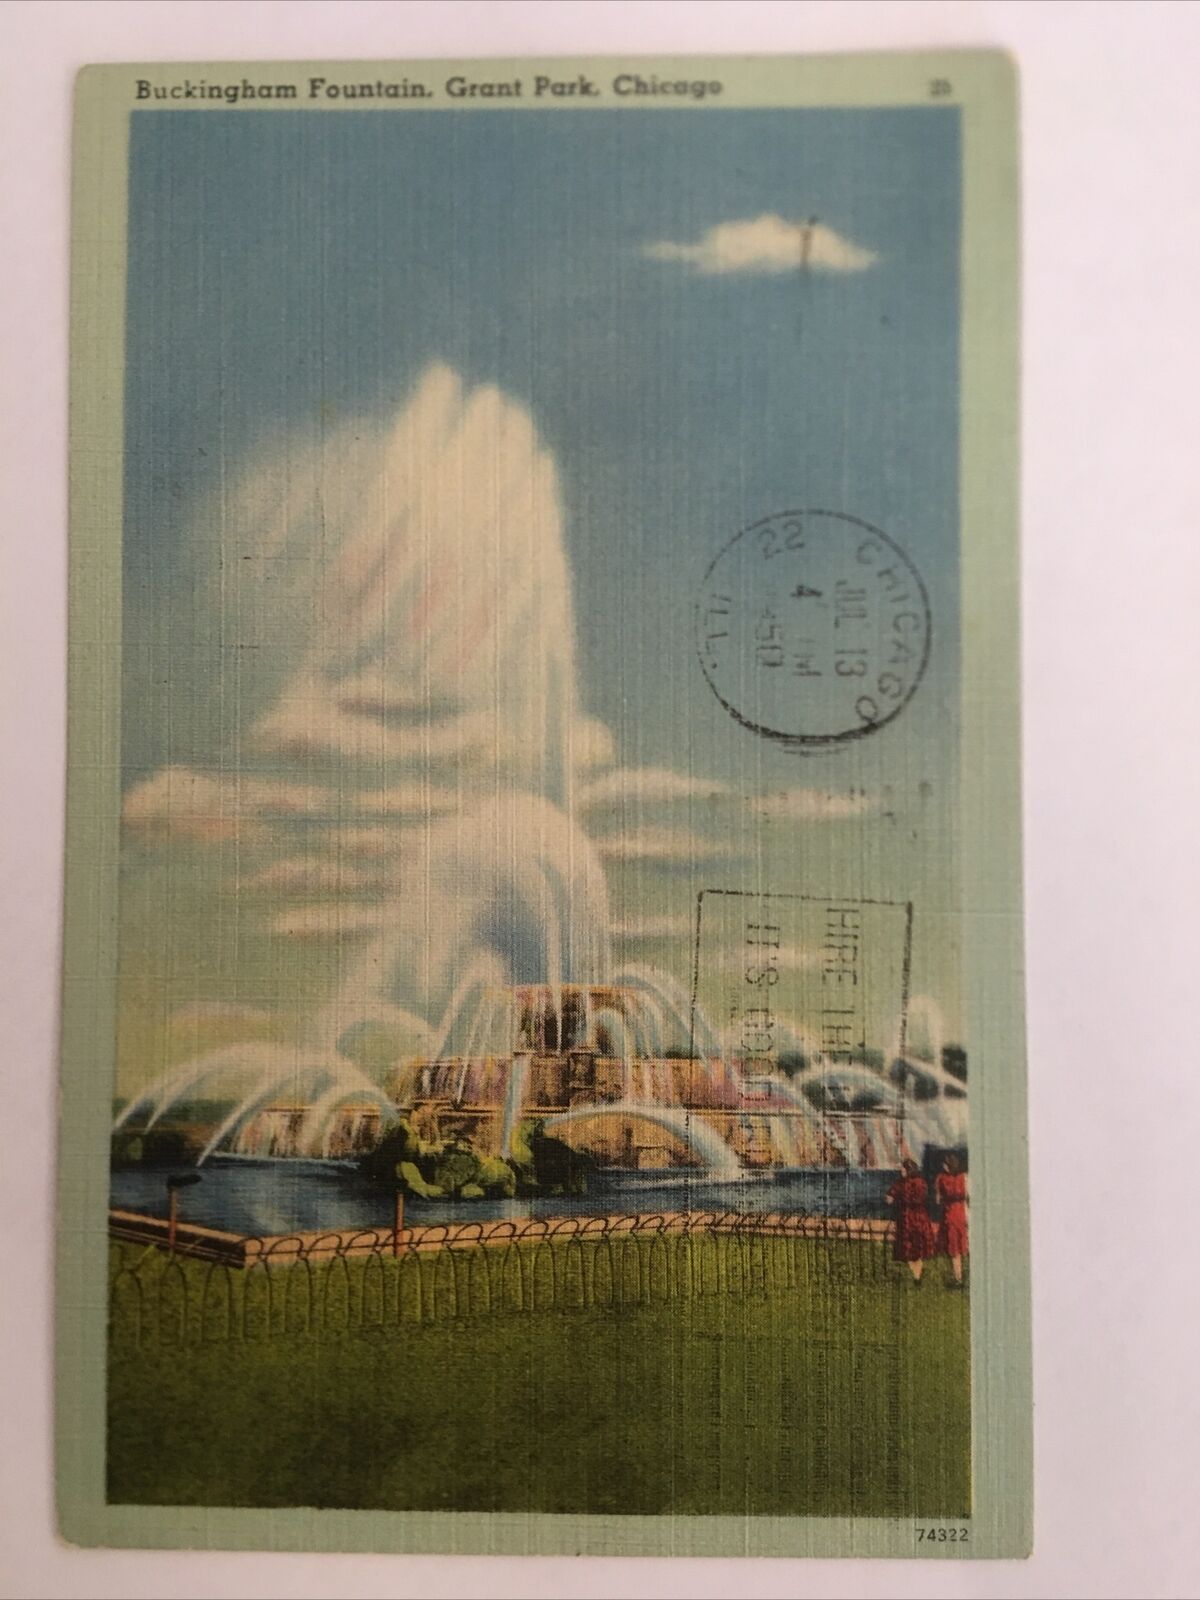 Buckingham Fountains Grand Park Chicago 1950 Vintage Postcard